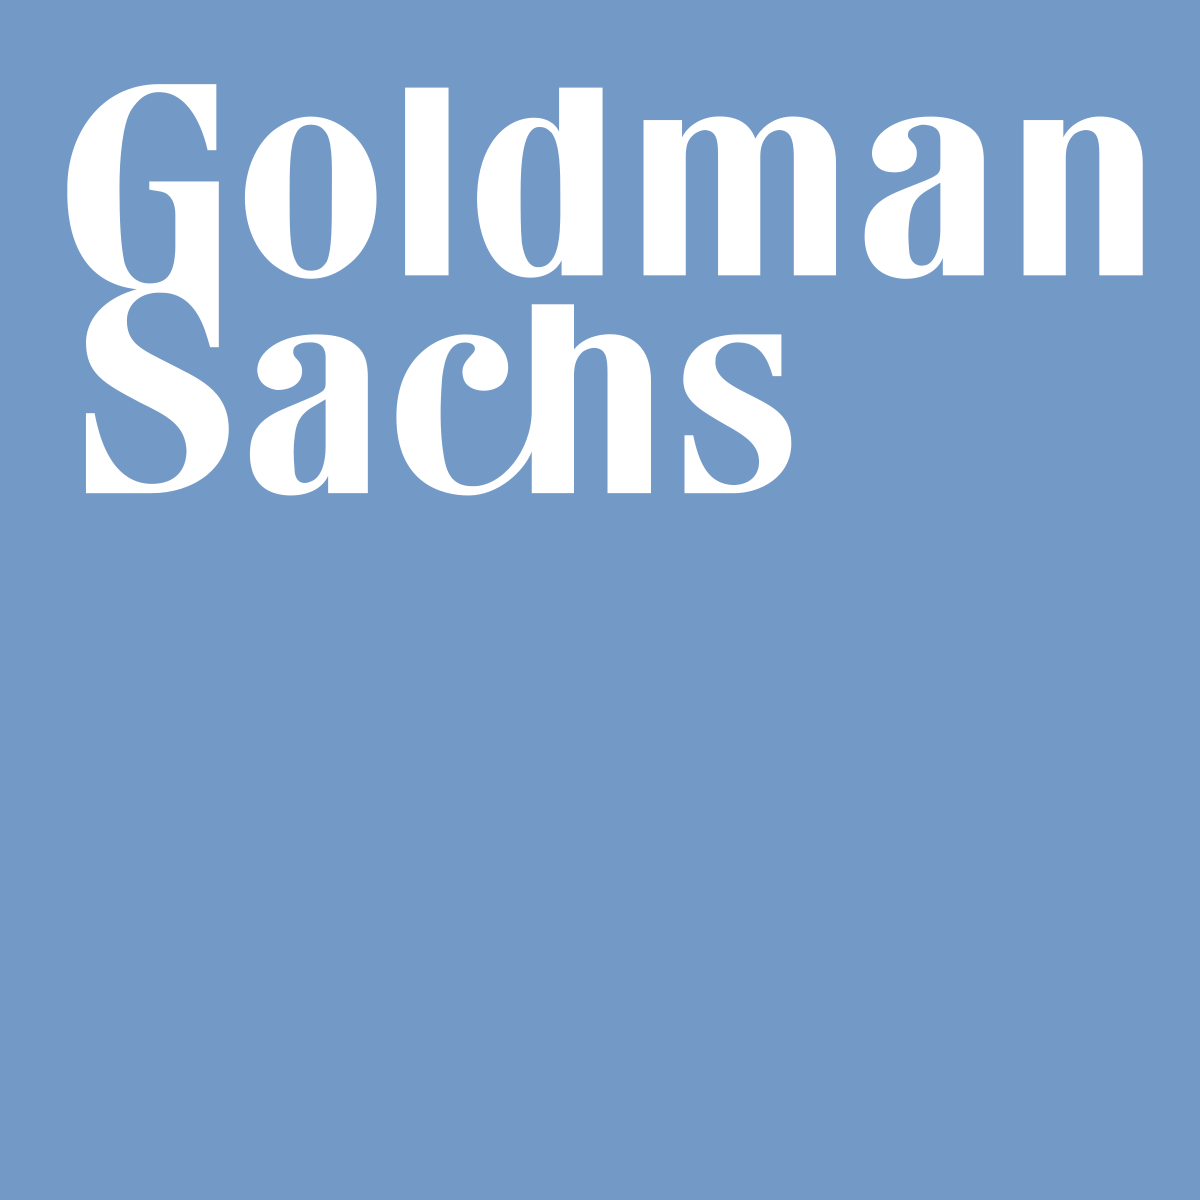 goldman sachs - wikipedia